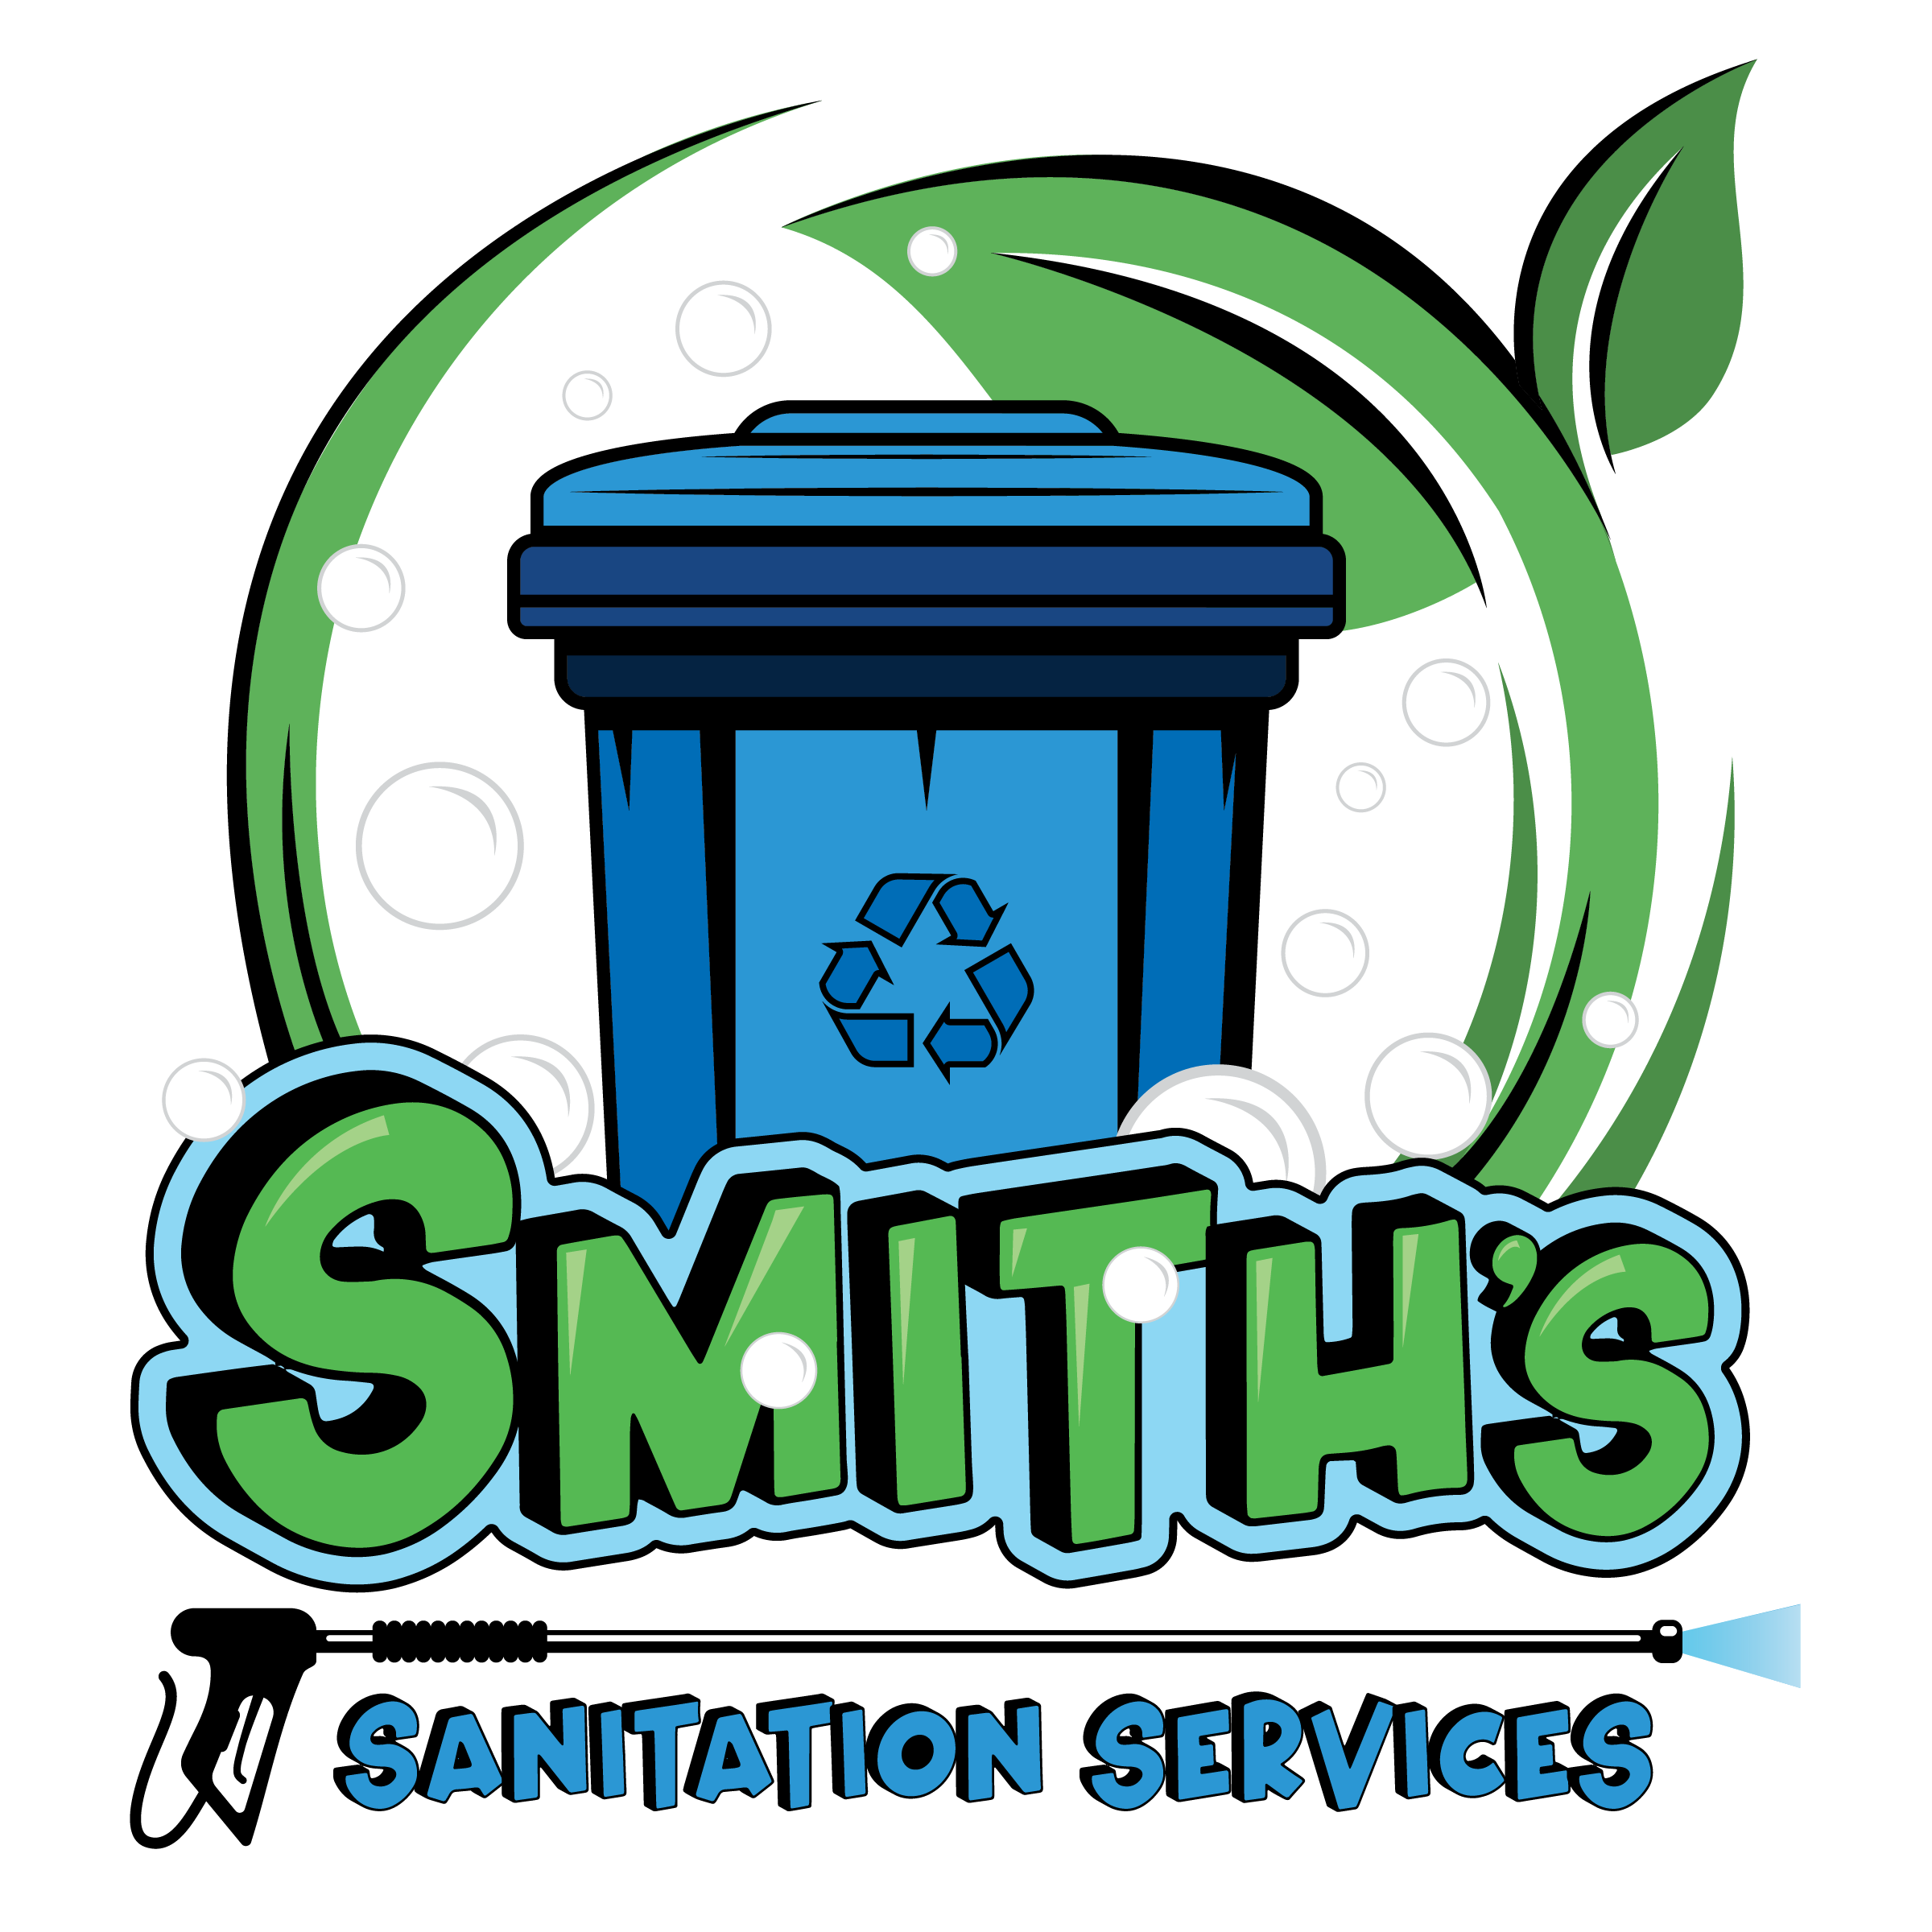 Smith’s Sanitation Services